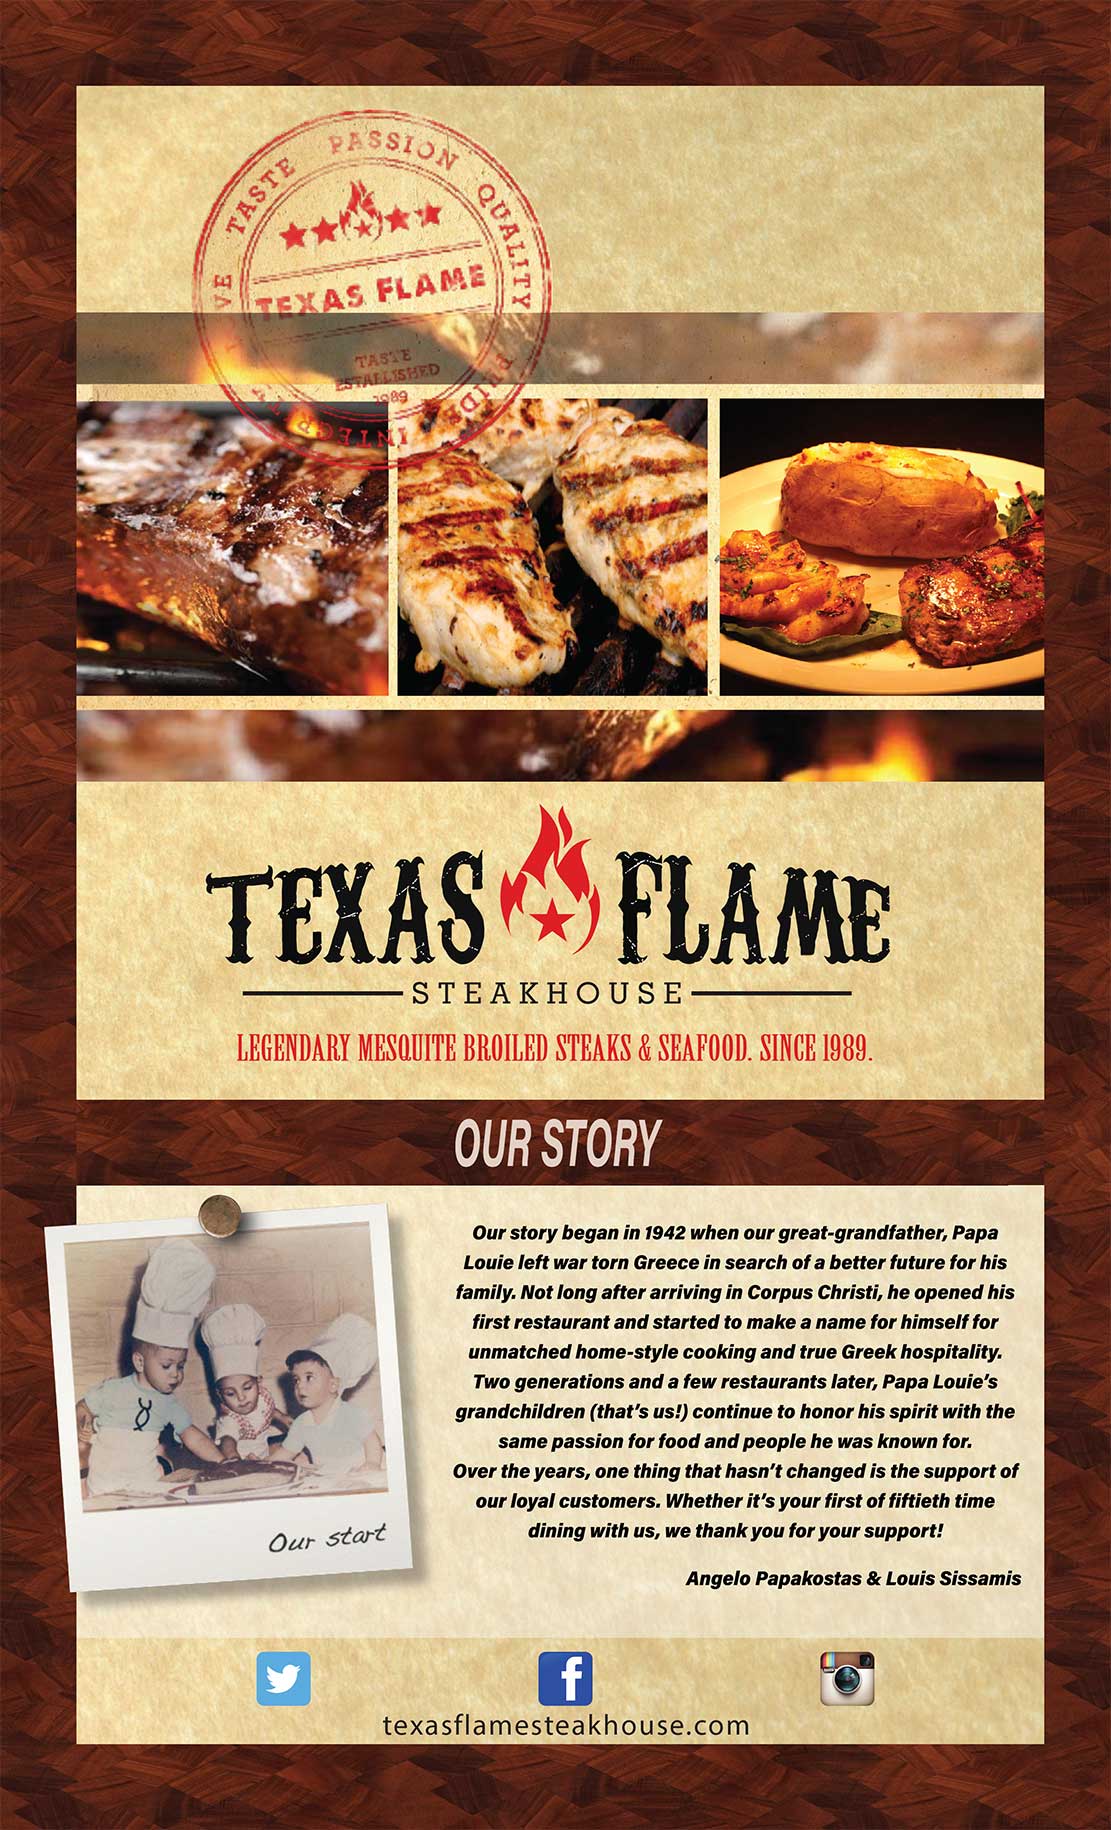 Texas Flame Steakhouse Restaurant Menu in Corpus Christi, Texas.